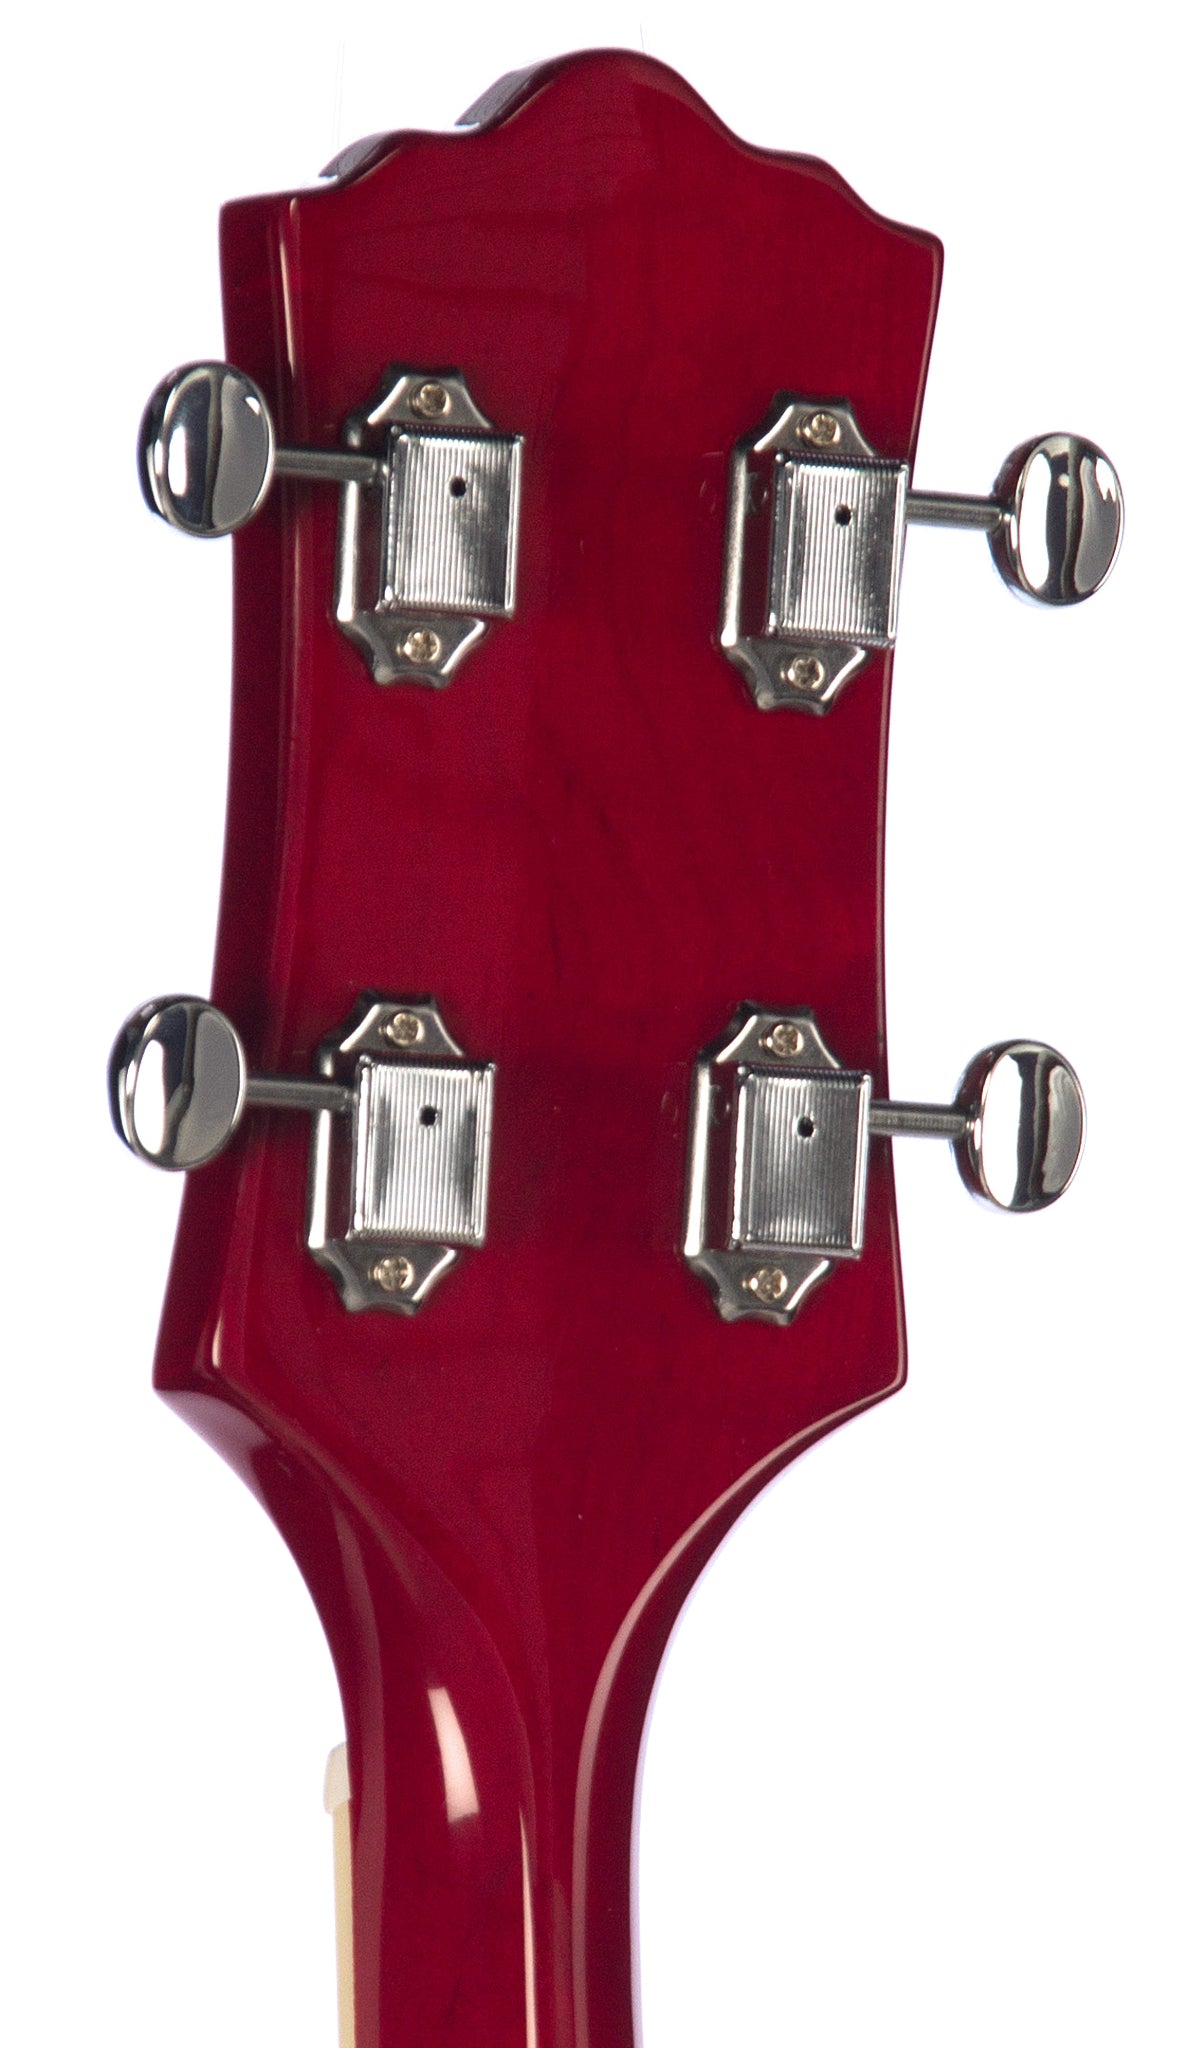 Eastwood Guitars Astrojet Tenor Cherry #color_cherry